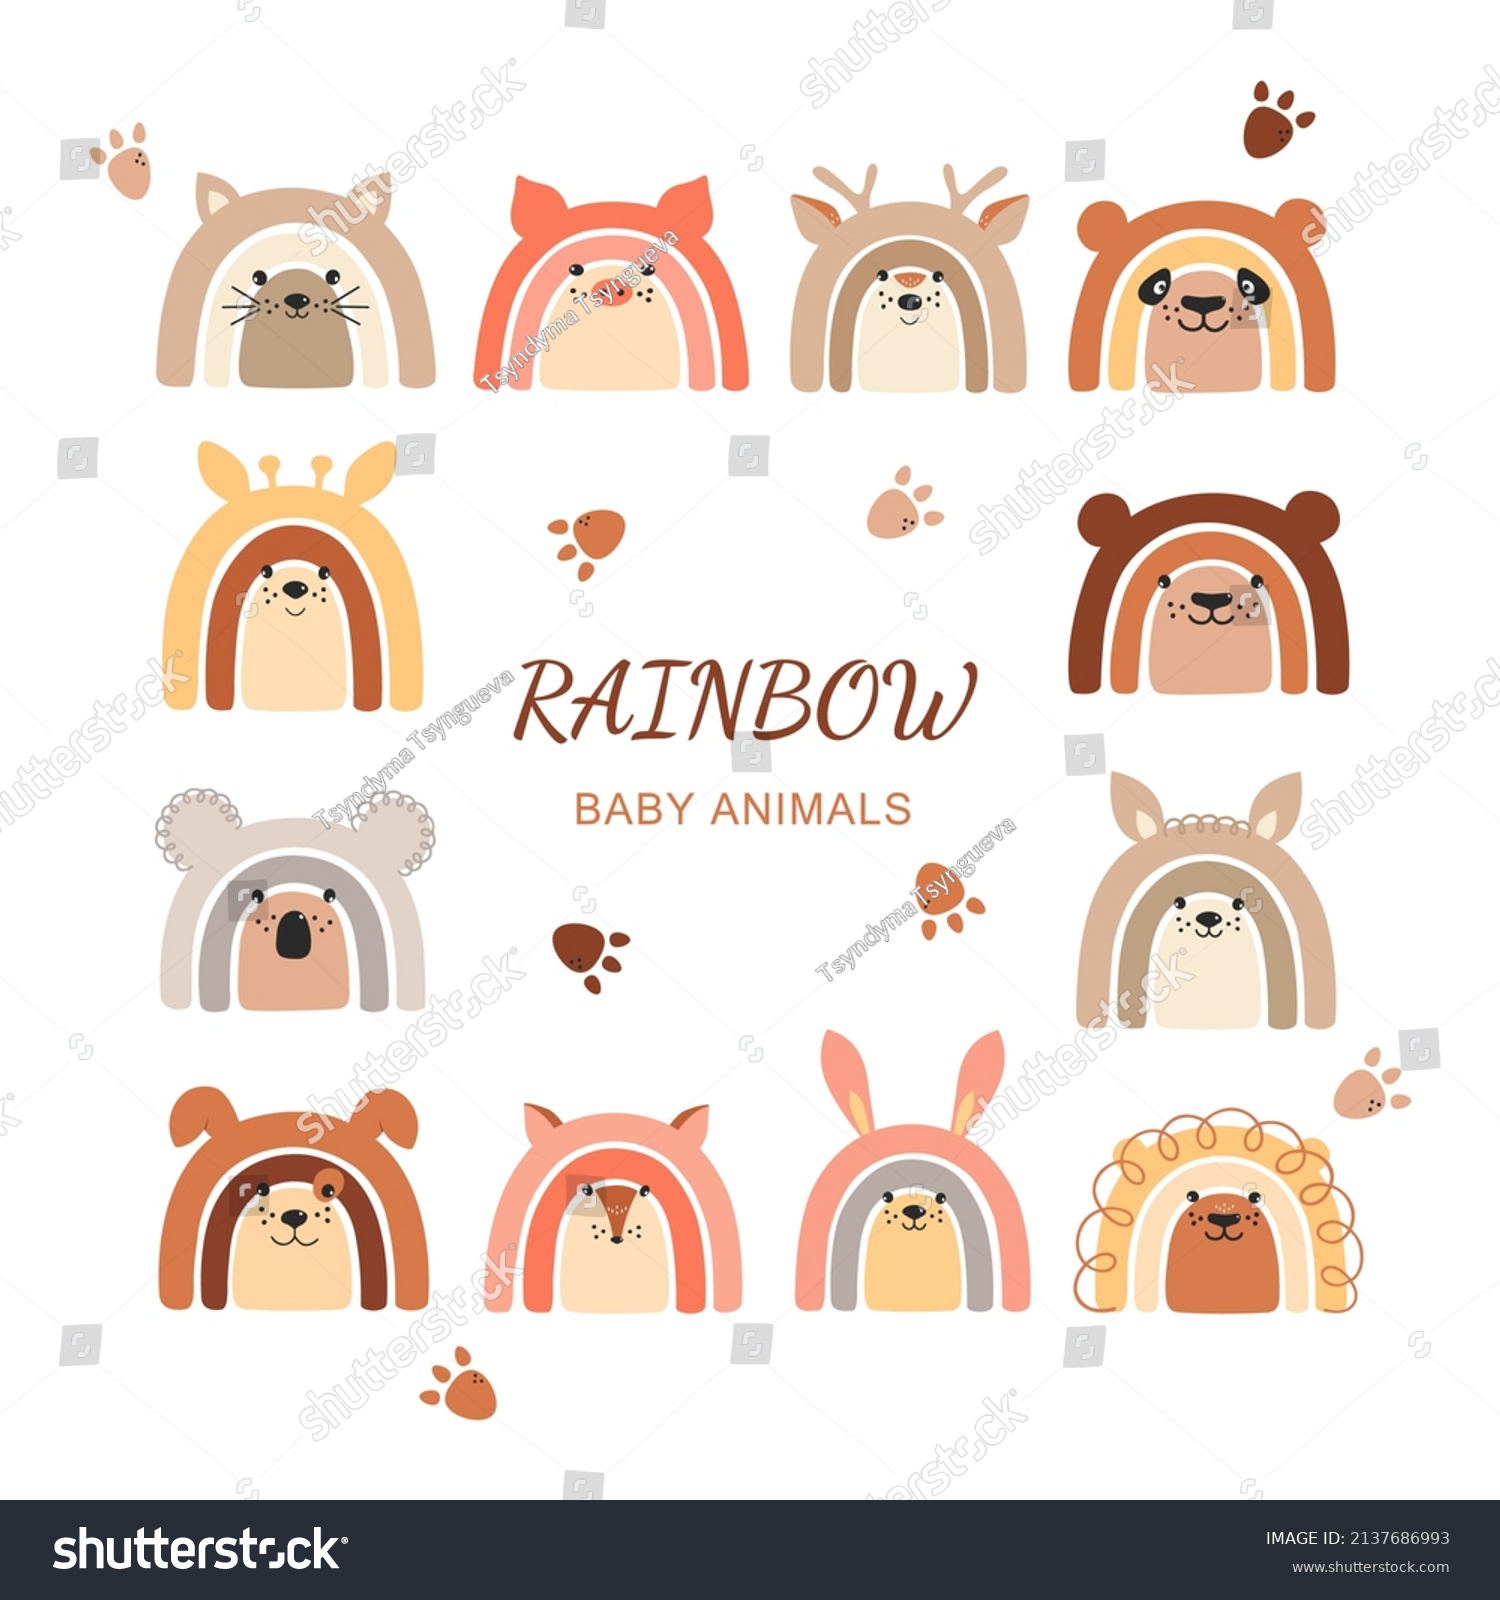 SVG of Set of cute rainbow baby animlas illustrations. Kids graphics in Scandinavian style. Rainbow, panda, bear, koala, bunny, llama, kitten, fox, lion. Posters, greeting cards, invitations, clothing. svg